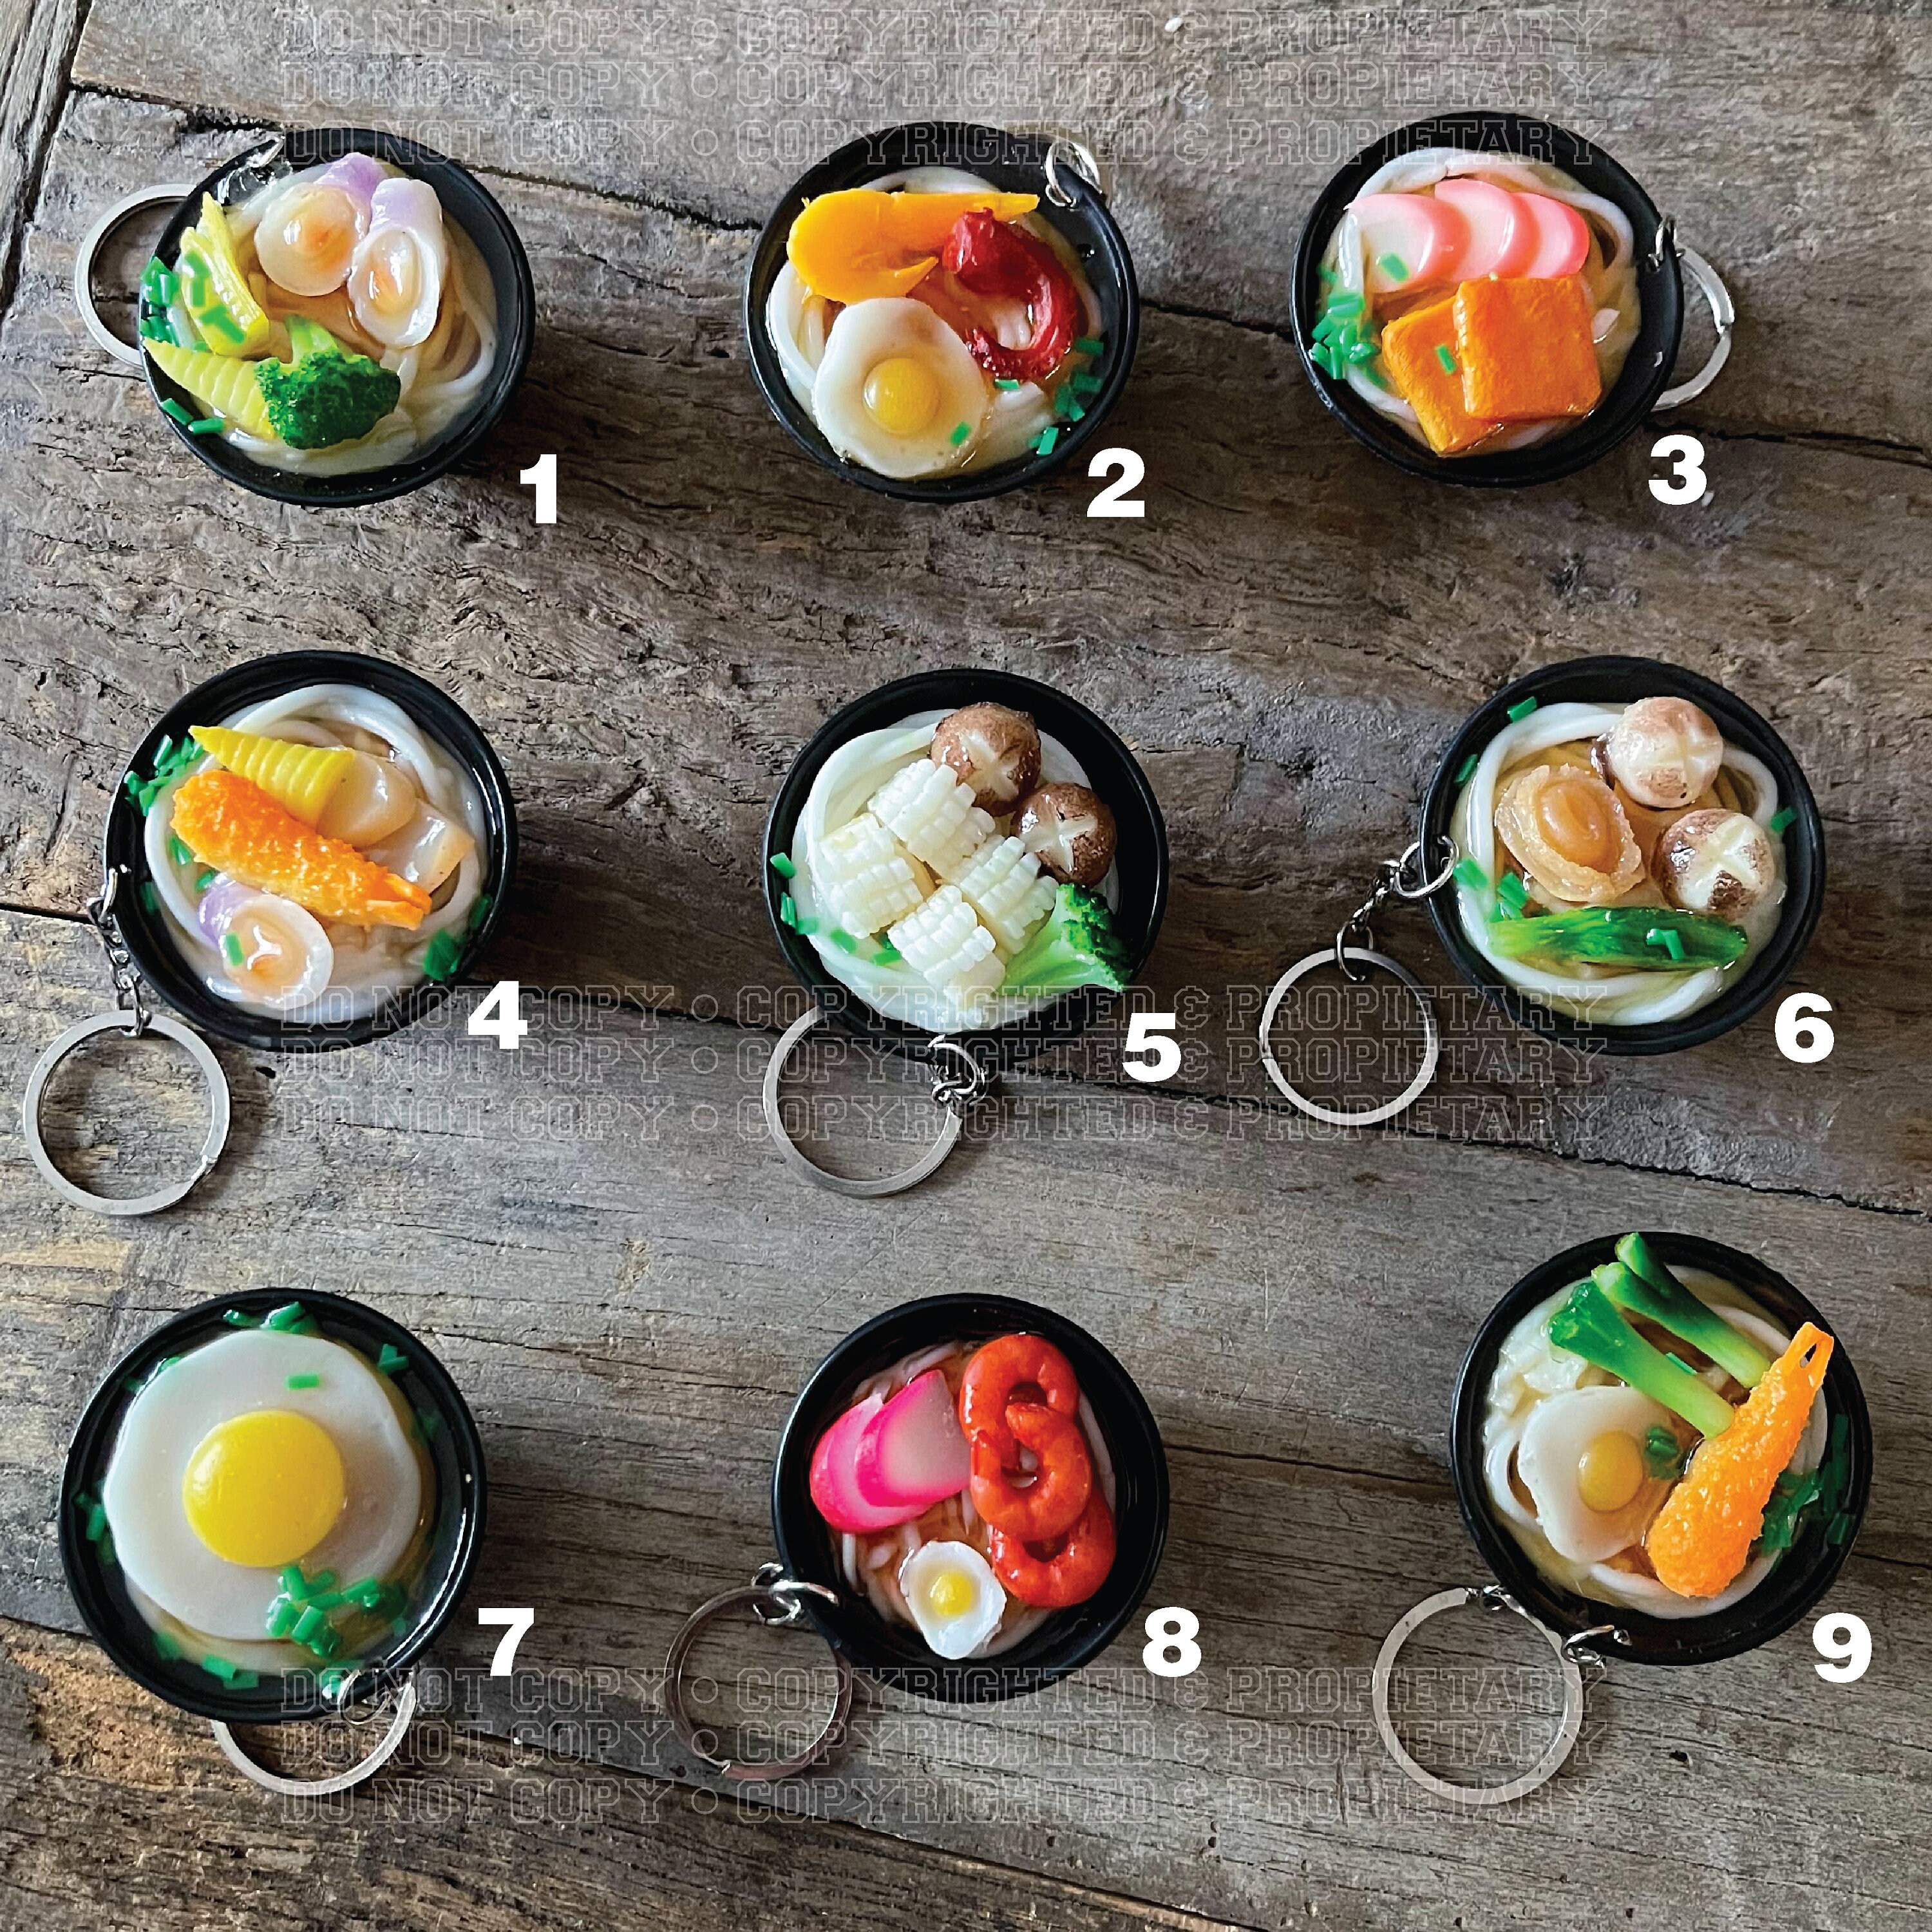 Japanese Miniature Simulated Food Bowl Of Ramen Keychain Style 1-9